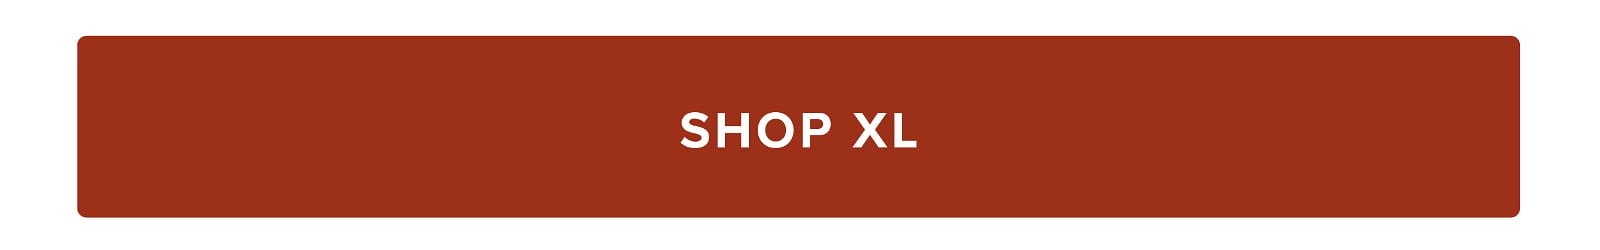 Shop XL